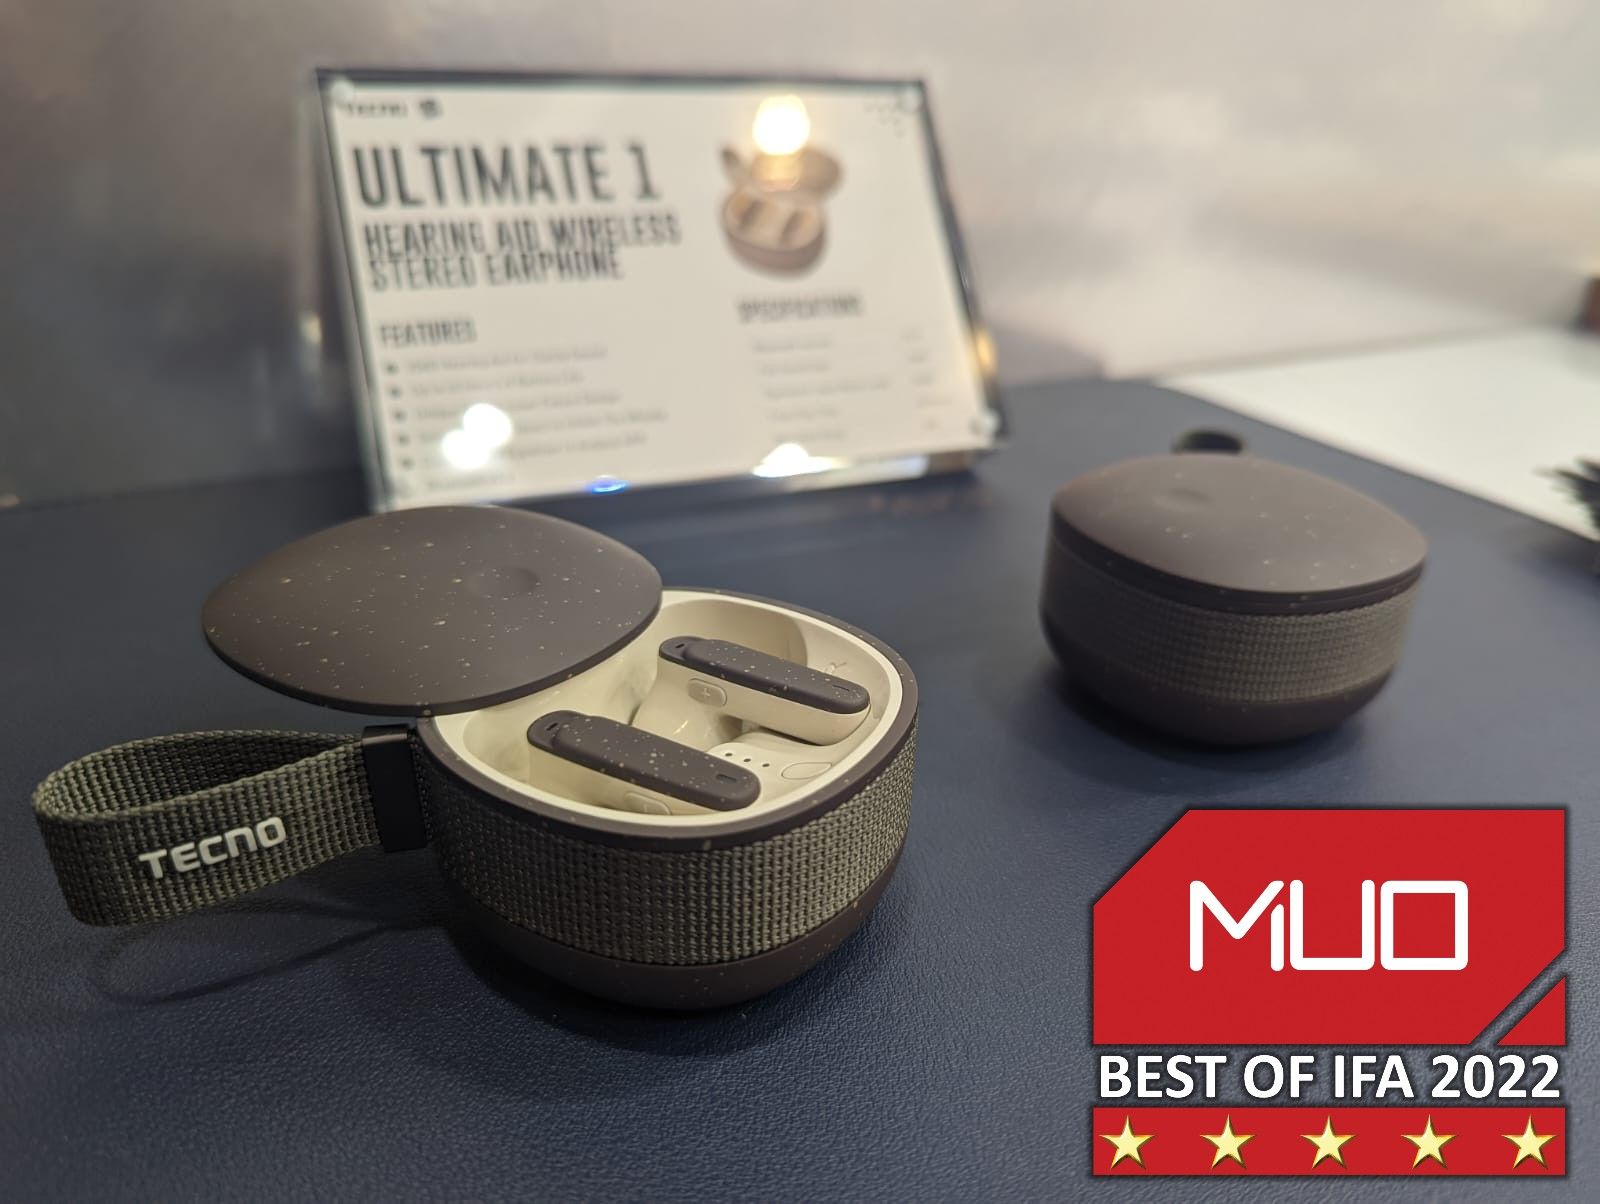 MUO IFA 2022 Award Best Headphones tecno ultimate 1